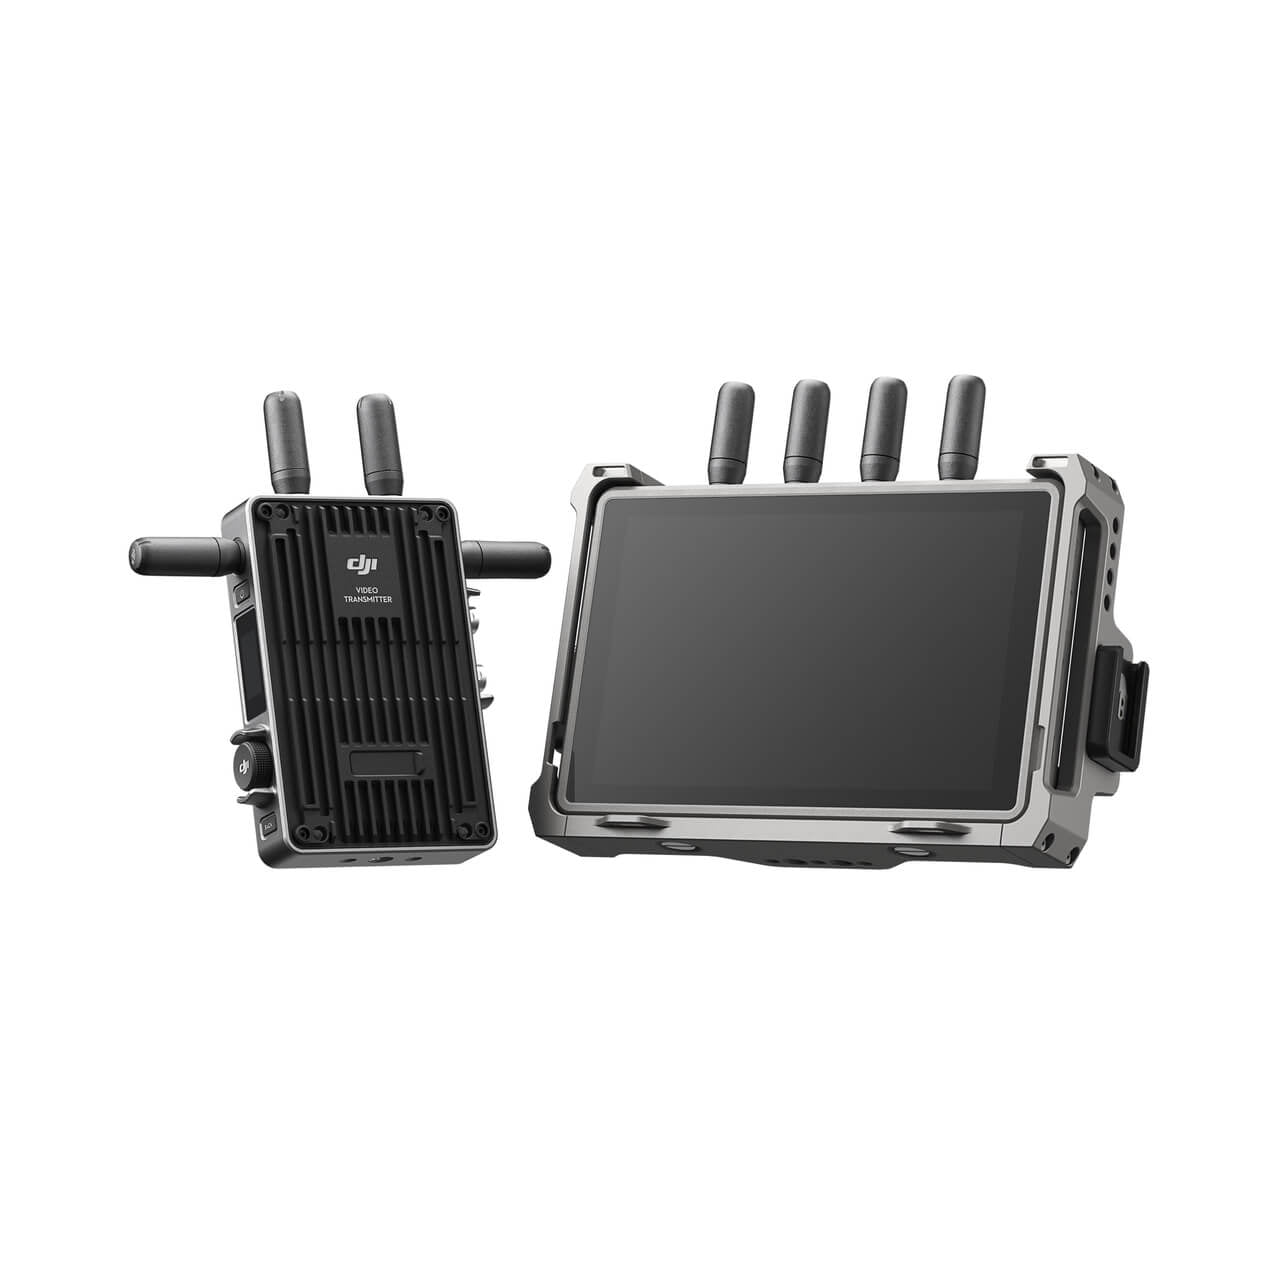 DJI Transmission -  20,000ft 1080p/60fps Wireless Video Transmission with Video Transmitter and Video Receiver VTX VRX (Standard / High-Bright Monitor Combo)